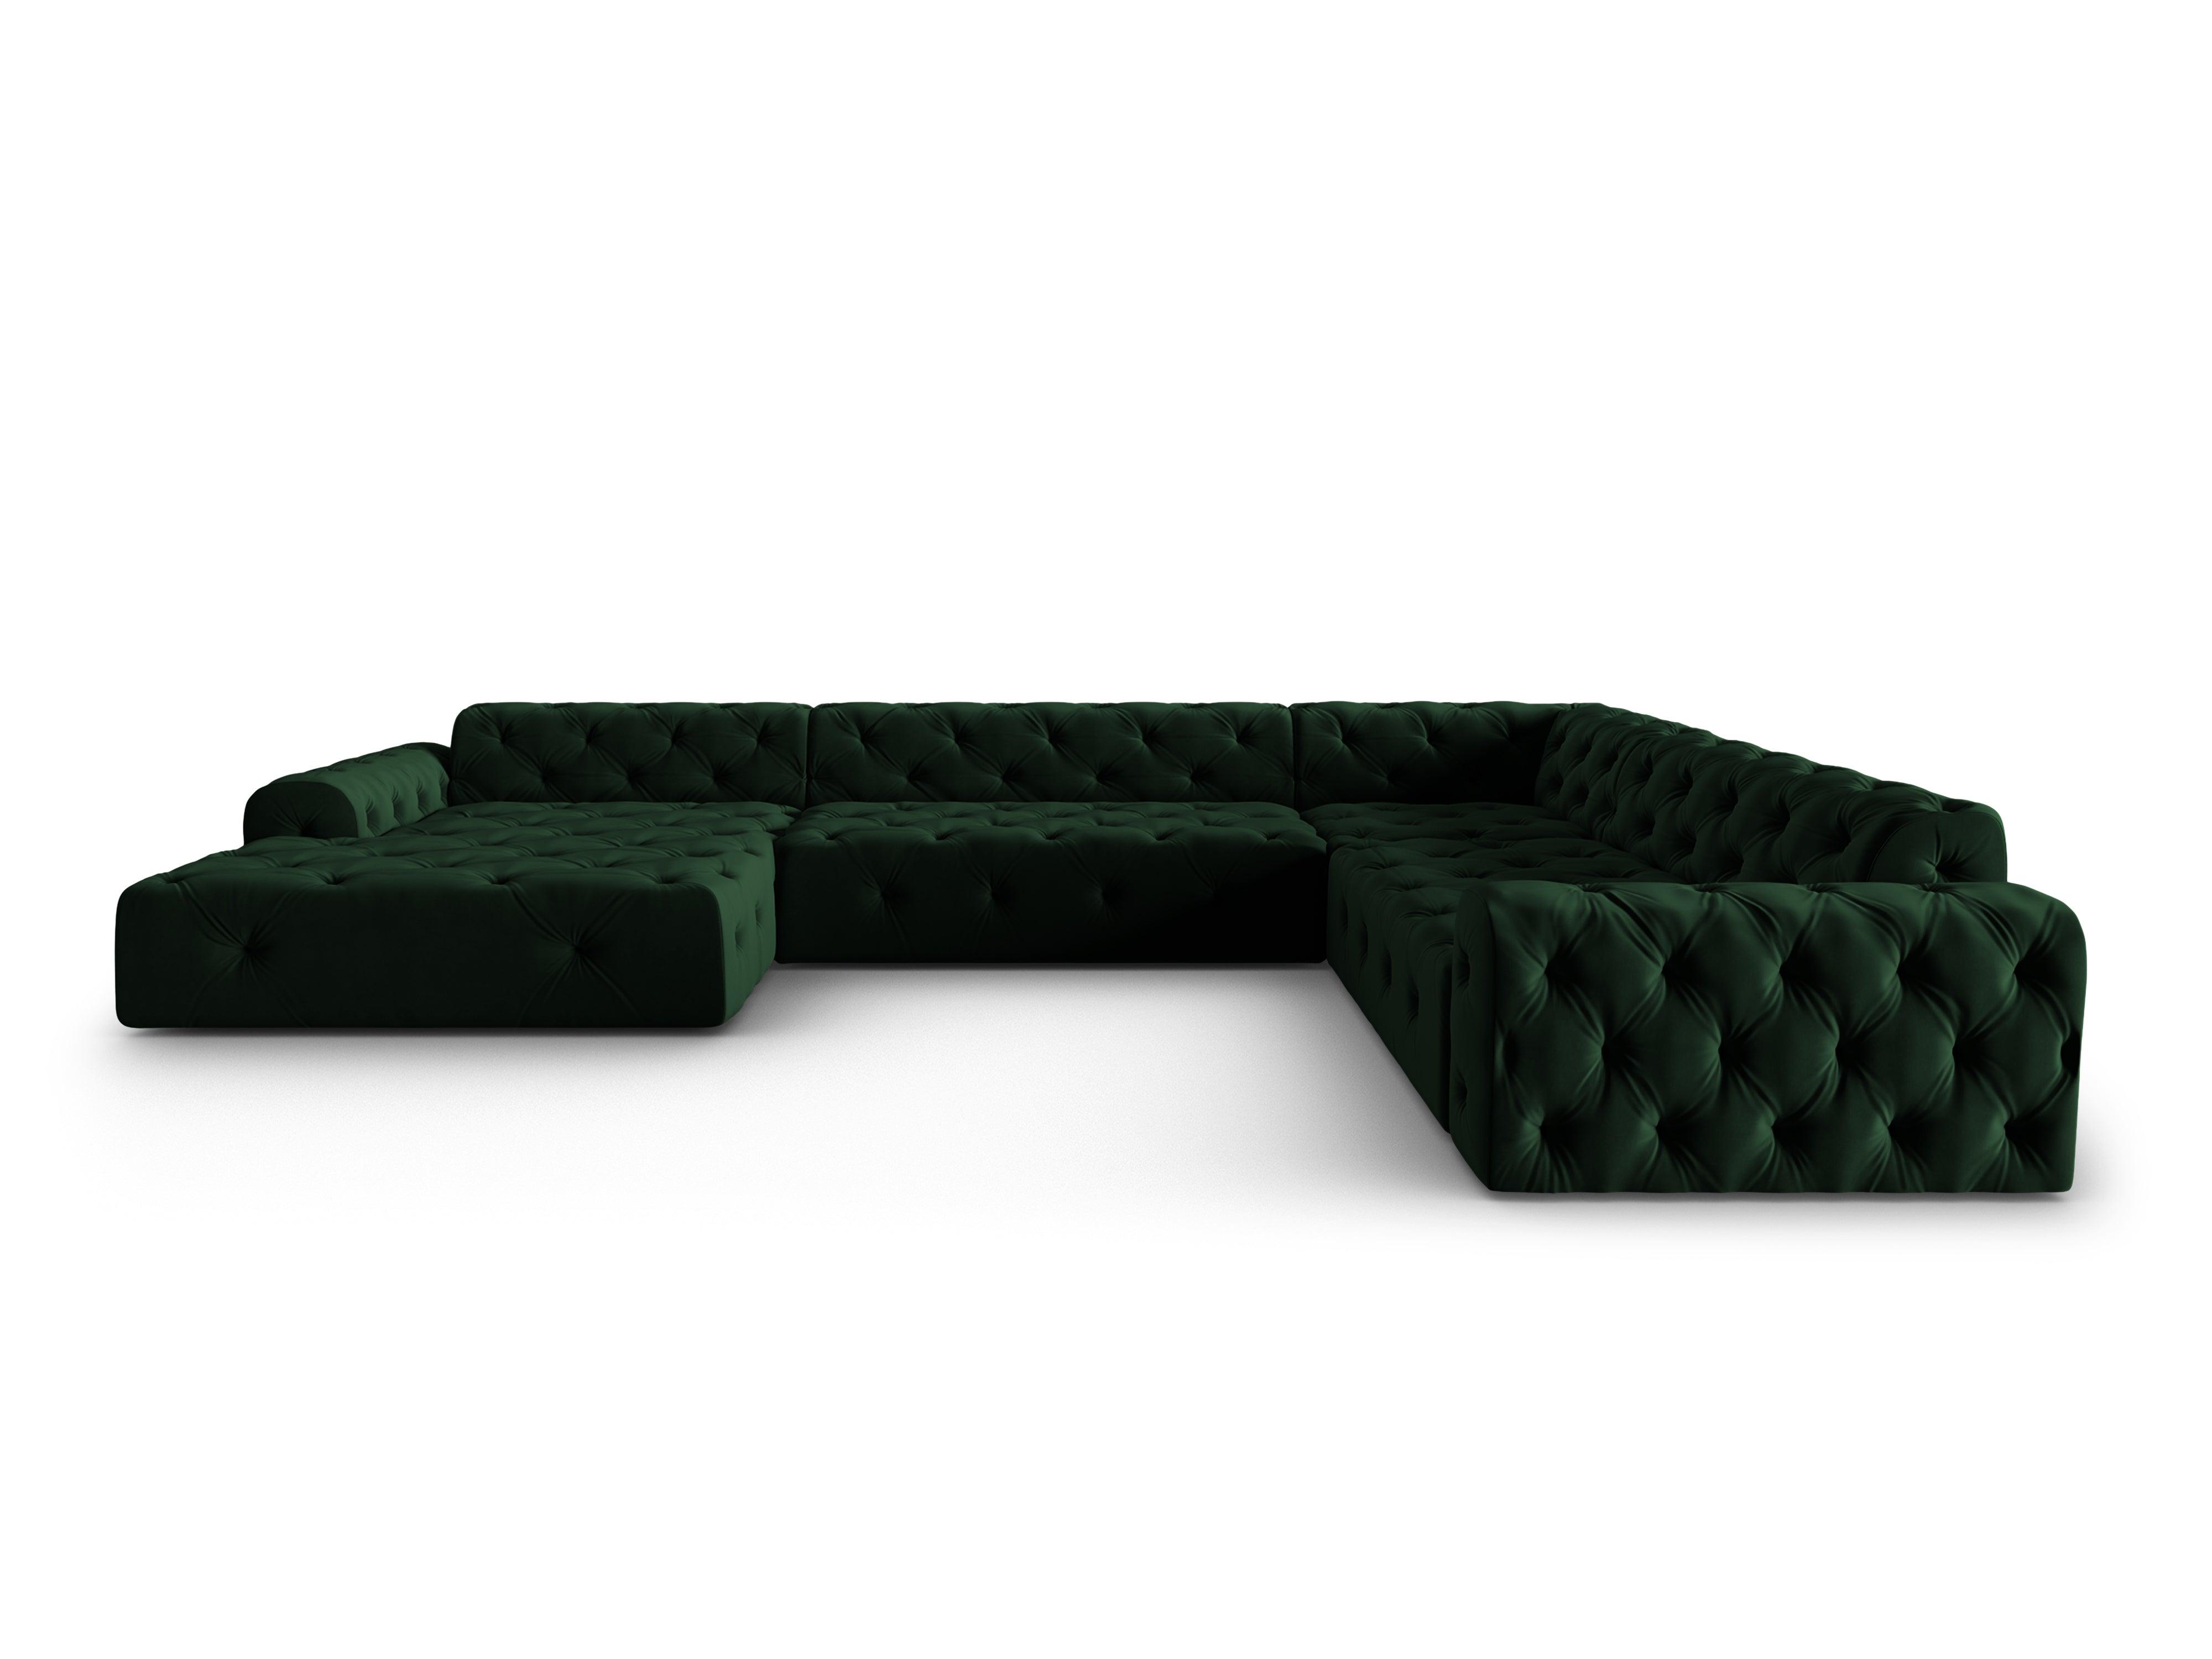 Velvet Panoramic Right Corner Sofa, "Candice", 6 Seats, 334x254x80
Made in Europe, Micadoni, Eye on Design